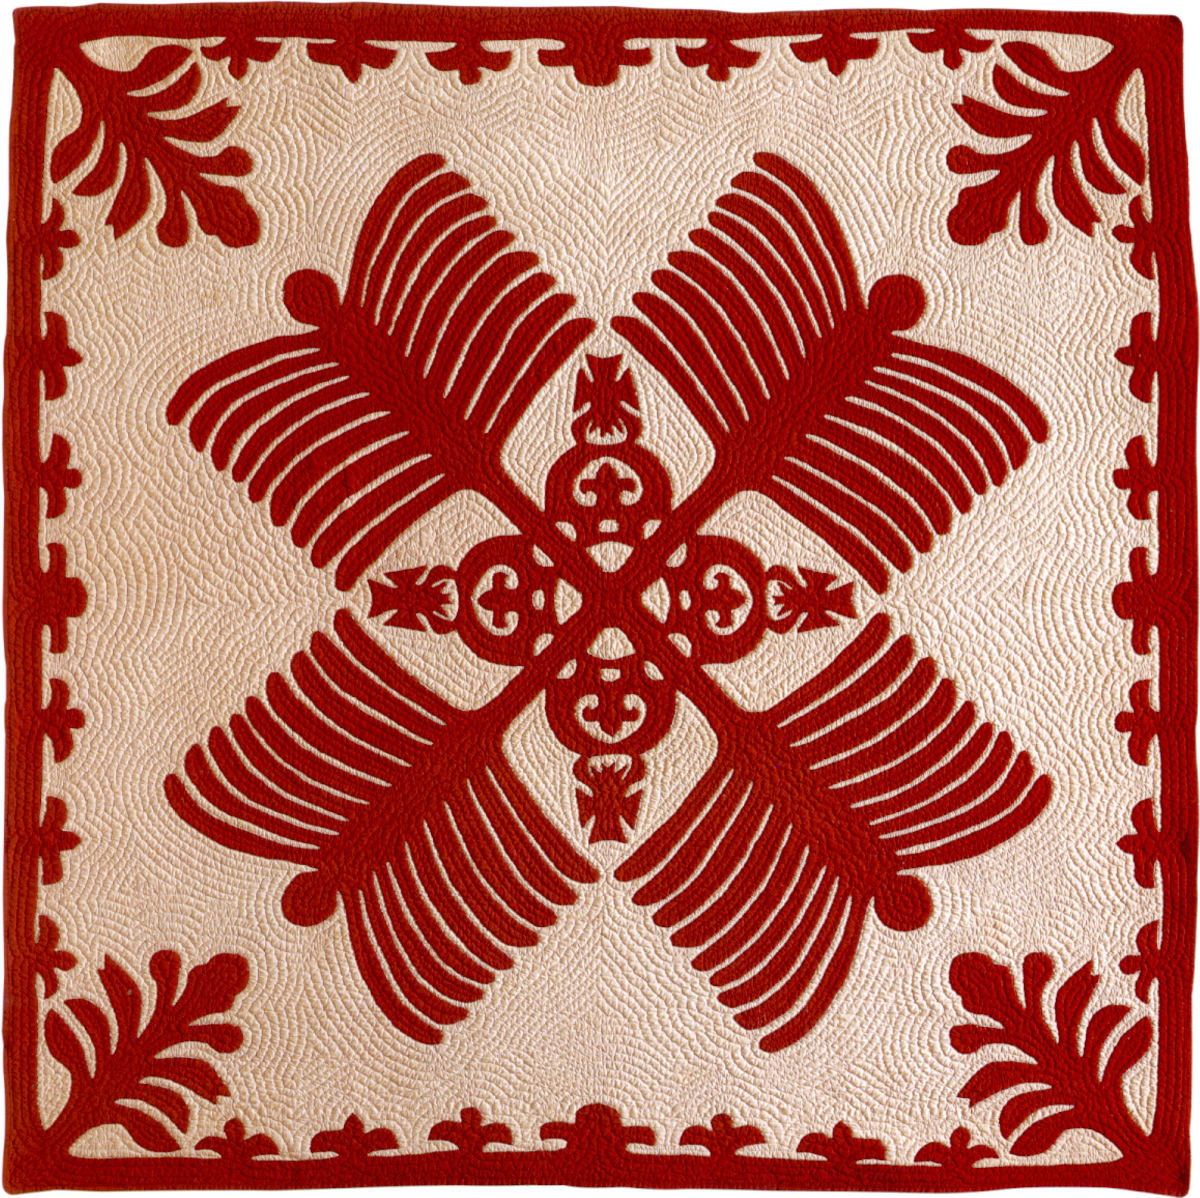 An example of a Hawaiian quilt